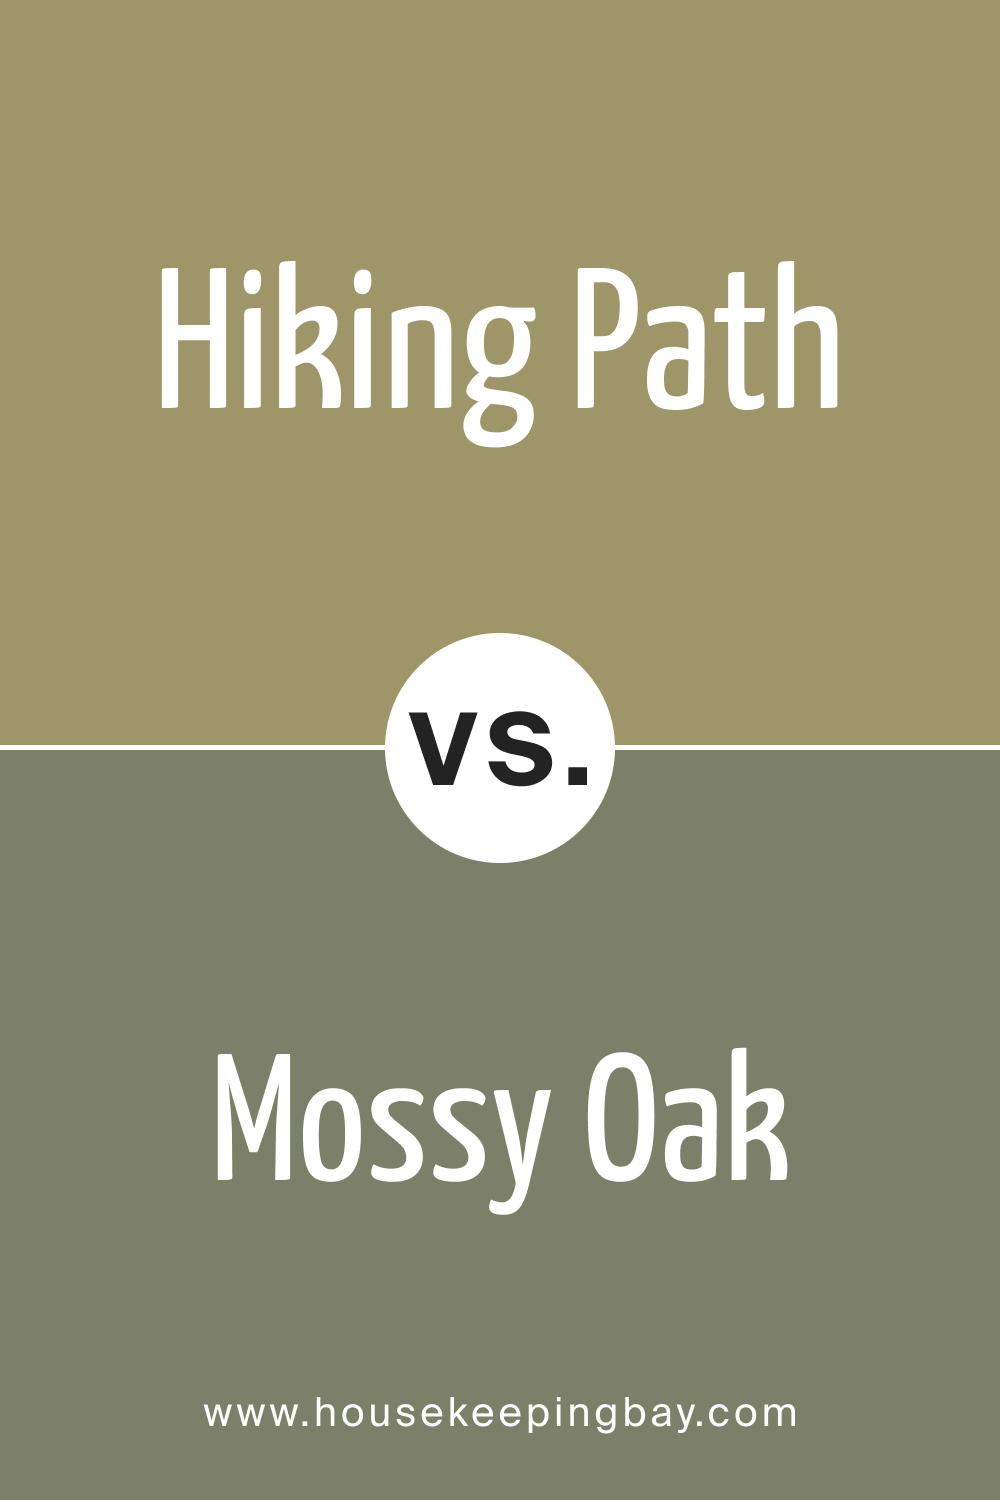 BM Hiking Path 524 vs. CC-600 Mossy Oak